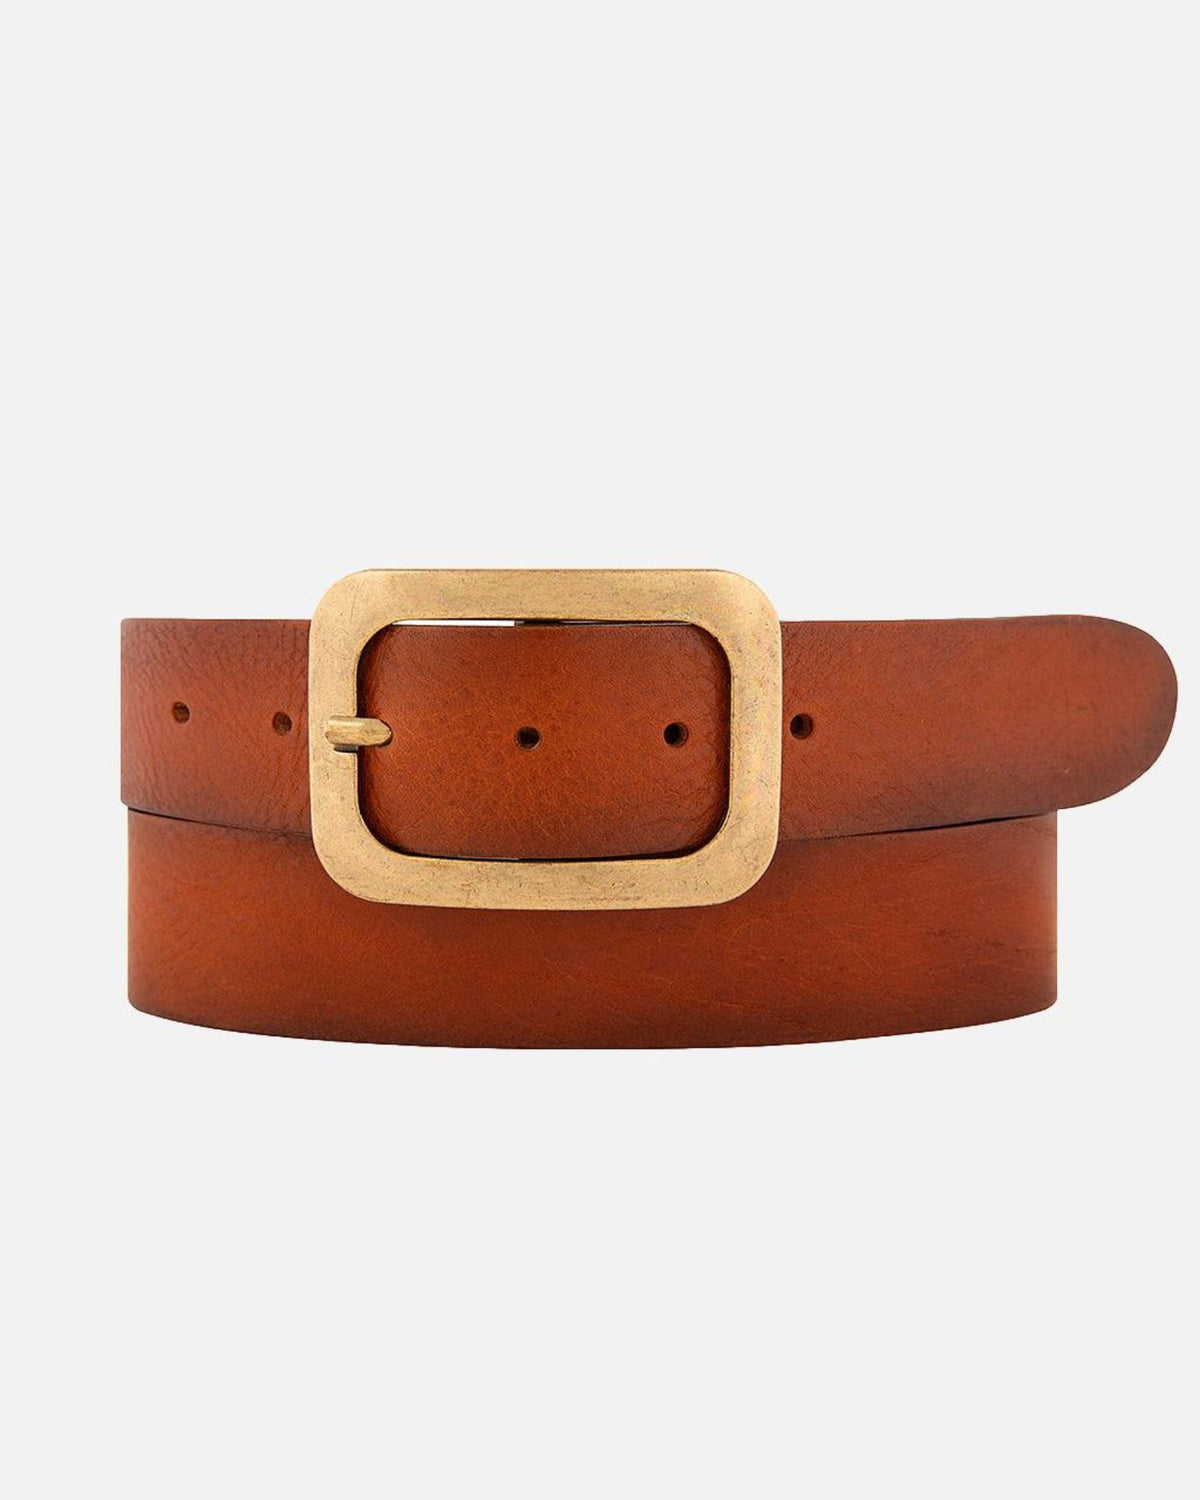 Women's Vintage Leather Belt with Gold Buckle - AMSHRTG 